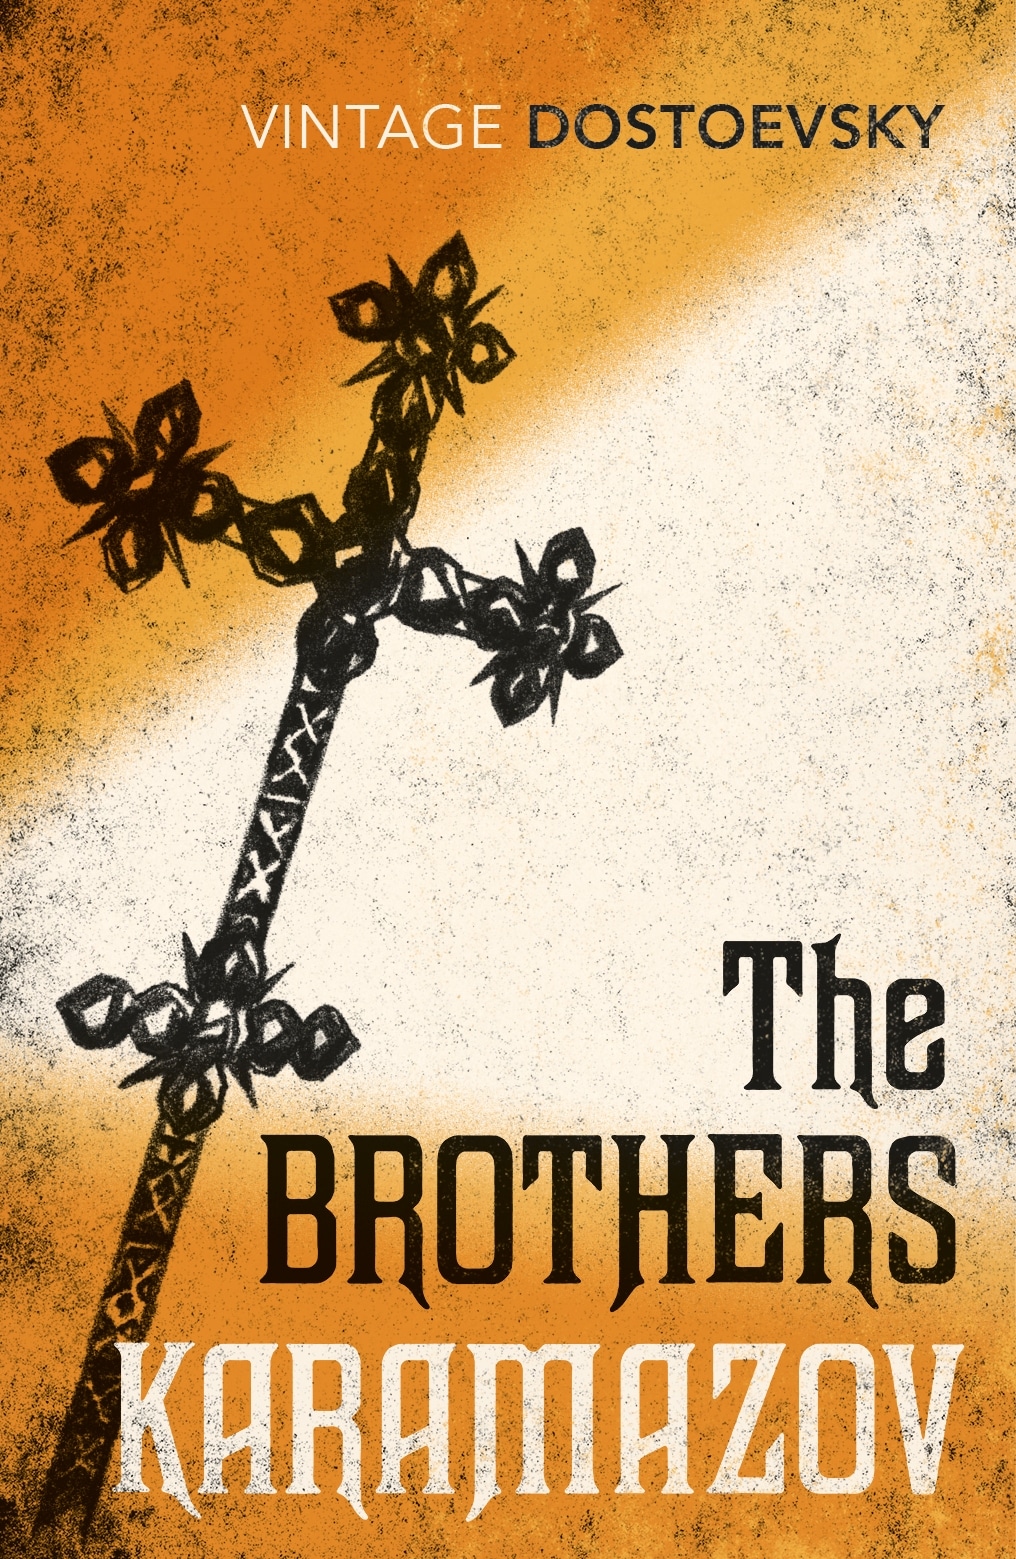 Book “The Brothers Karamazov” by Fyodor Dostoyevsky — January 16, 1992